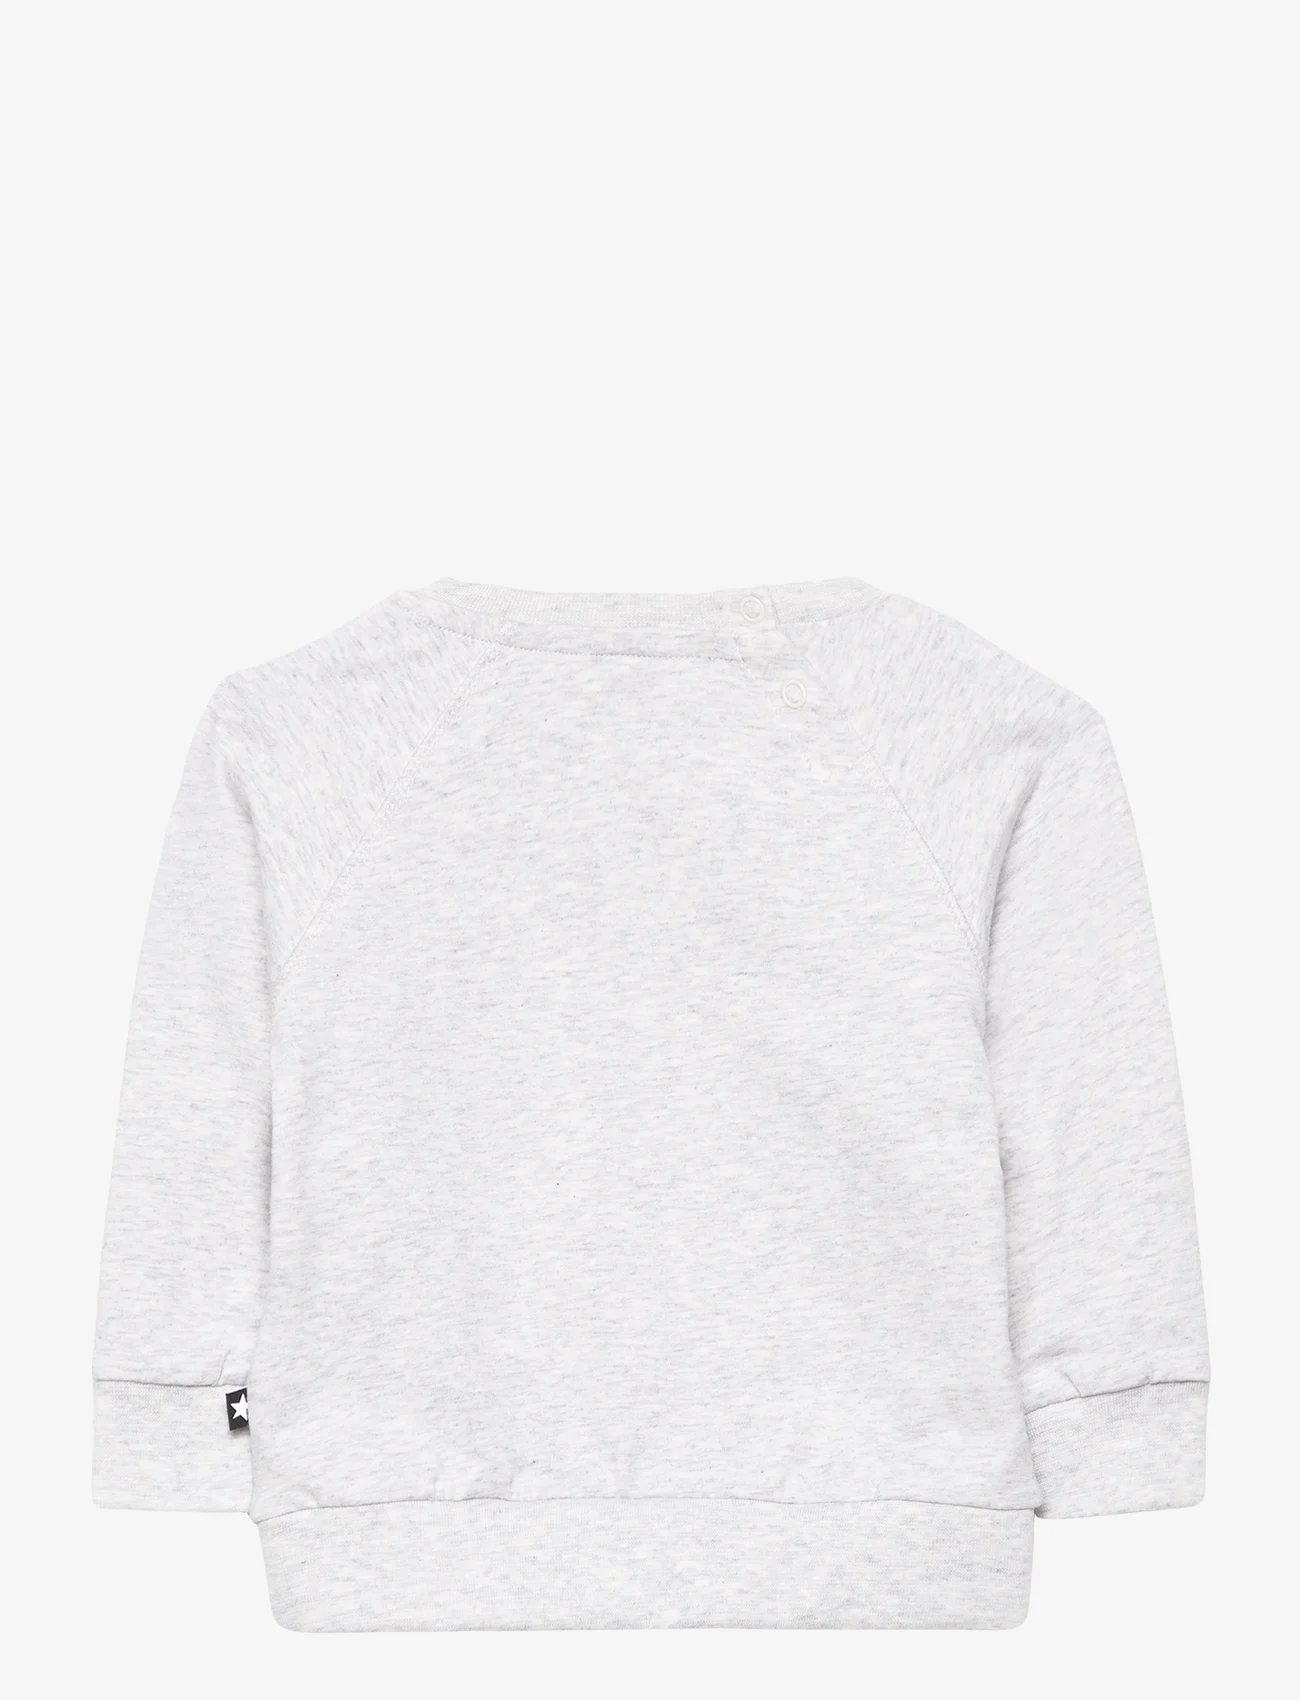 Molo - Elsa - sweatshirts & hoodies - mimosa rabbit - 1